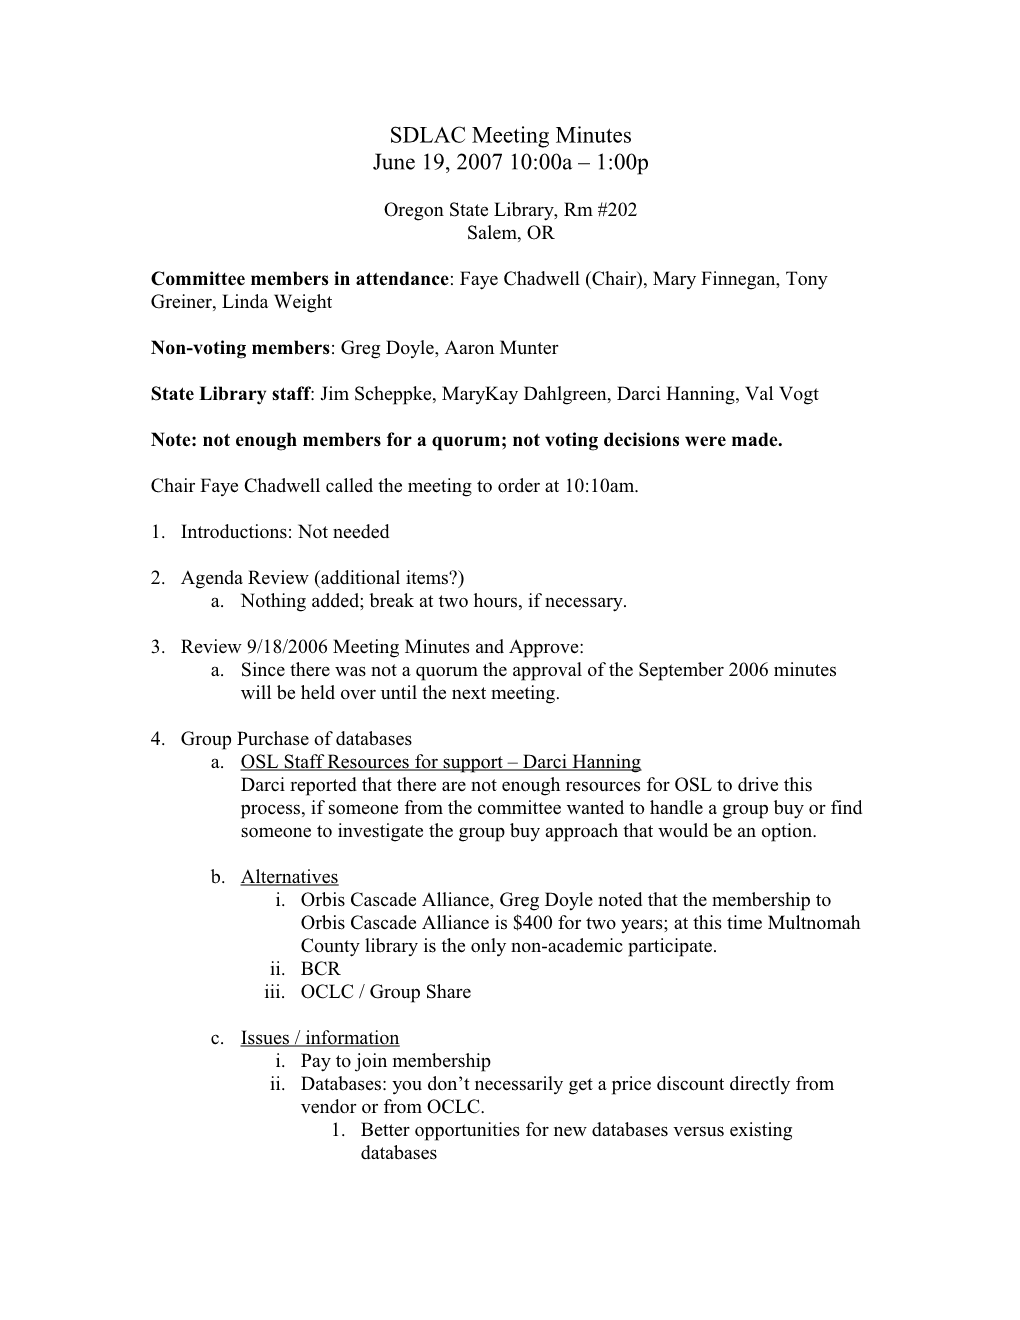 SDLAC Meeting Minutes (Draft)